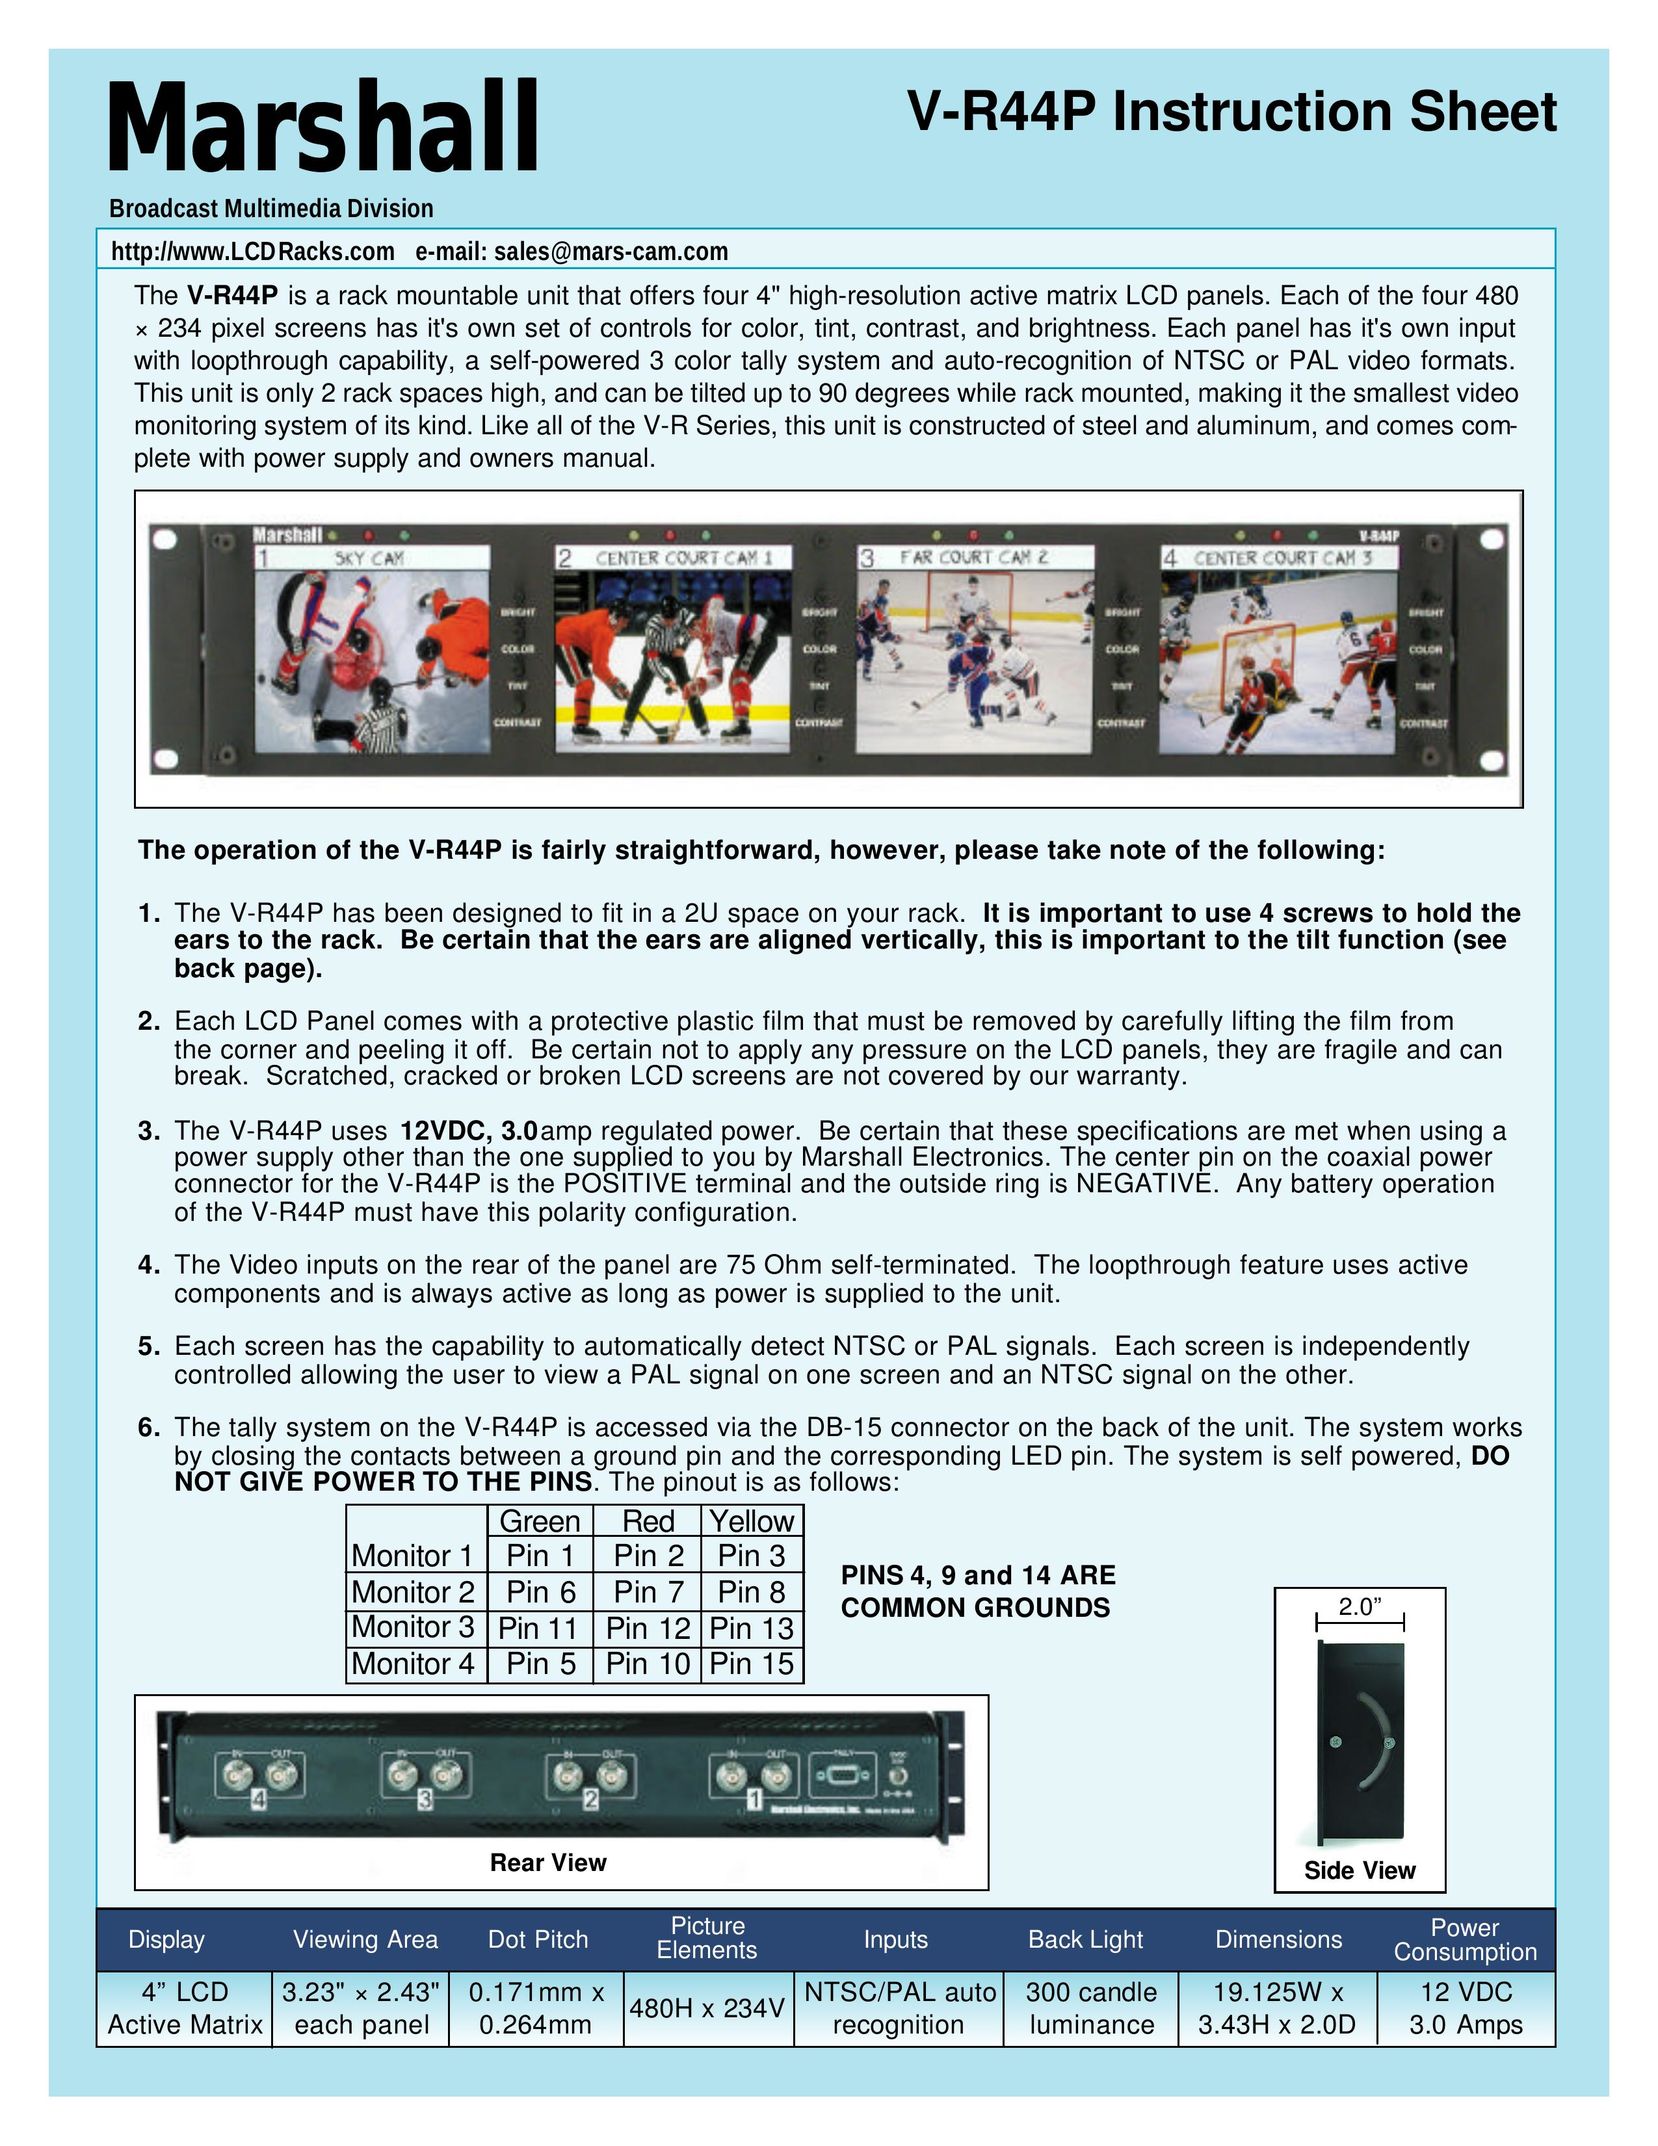 Marshall electronic V-R44P Flat Panel Television User Manual